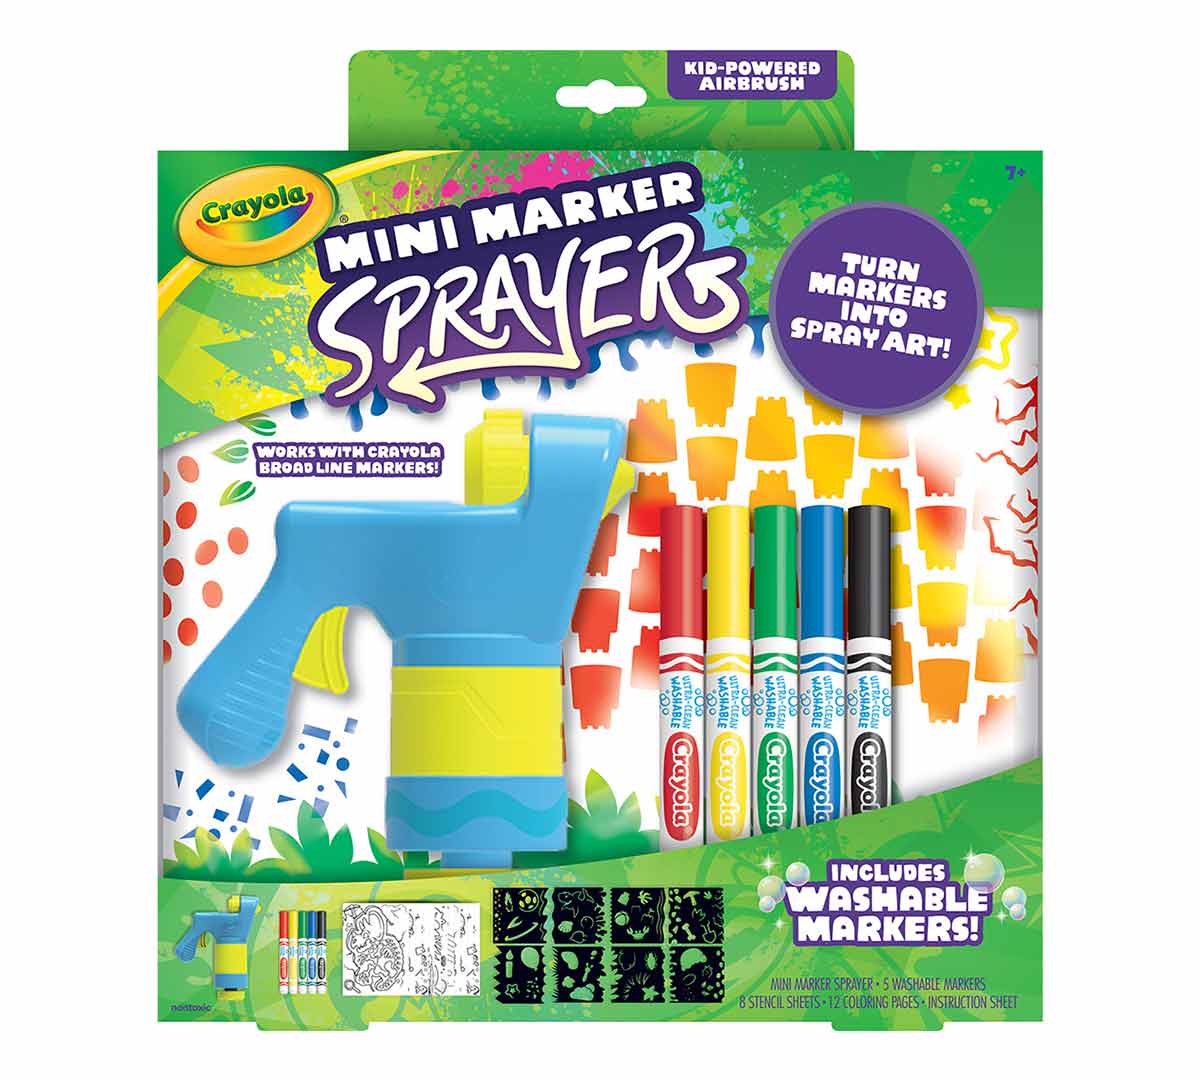 Mini Sprayer, Marker Airbrush Kit | Crayola.com | Crayola